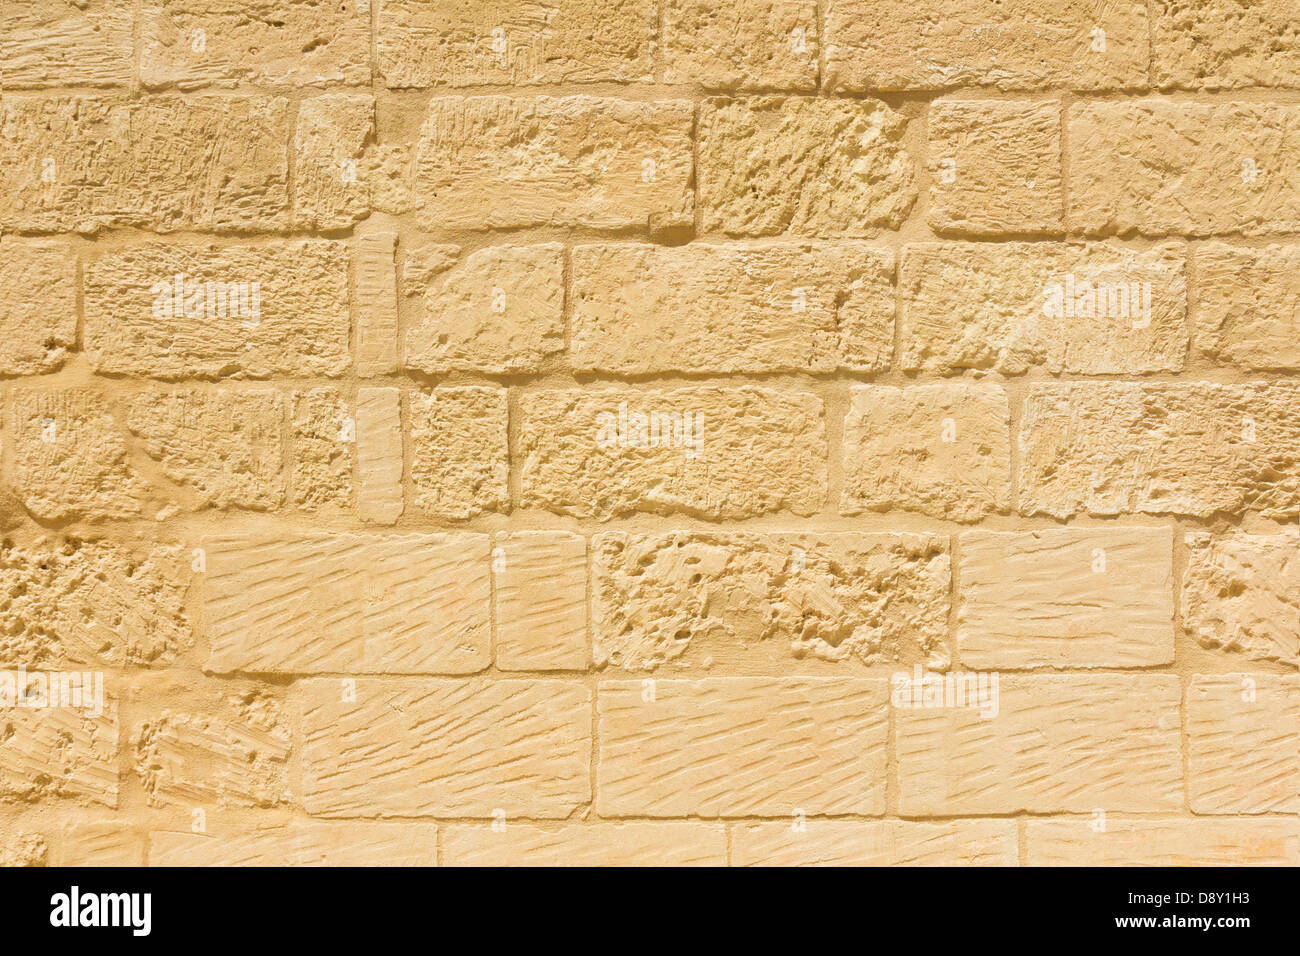 Weathered sandstone brick wall background Stock Photo